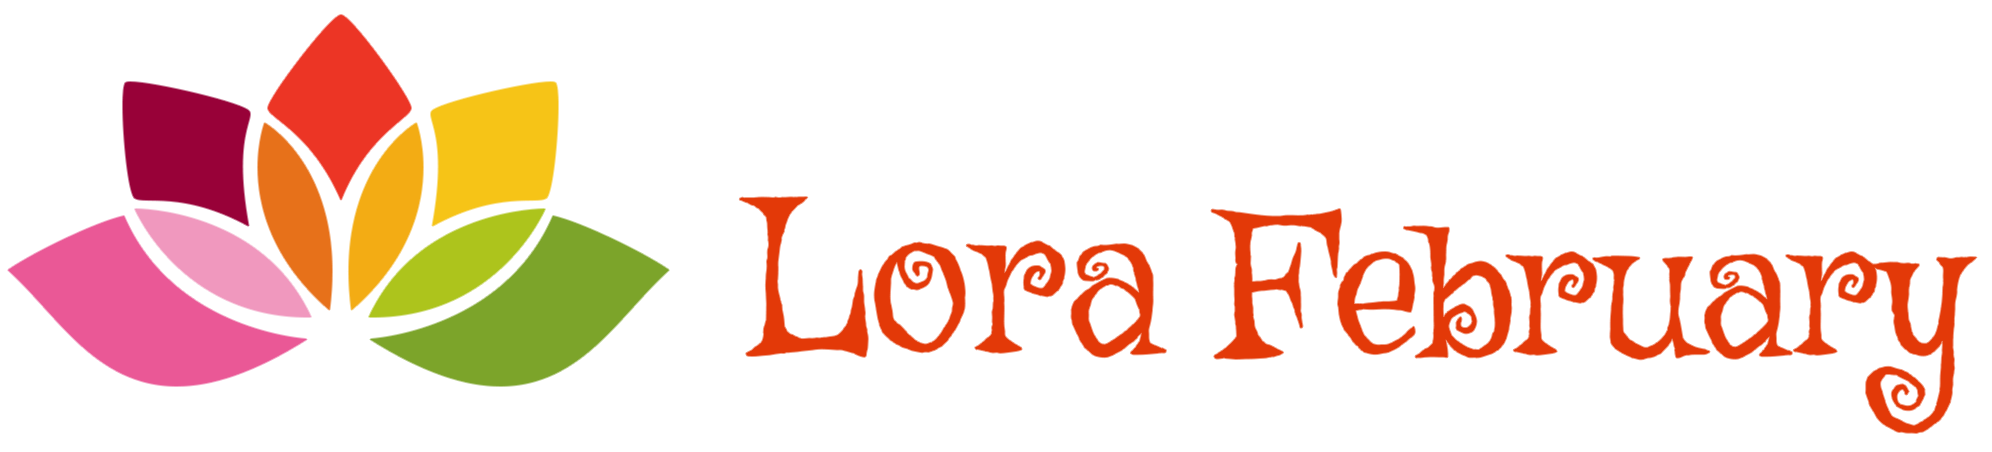 Lora February